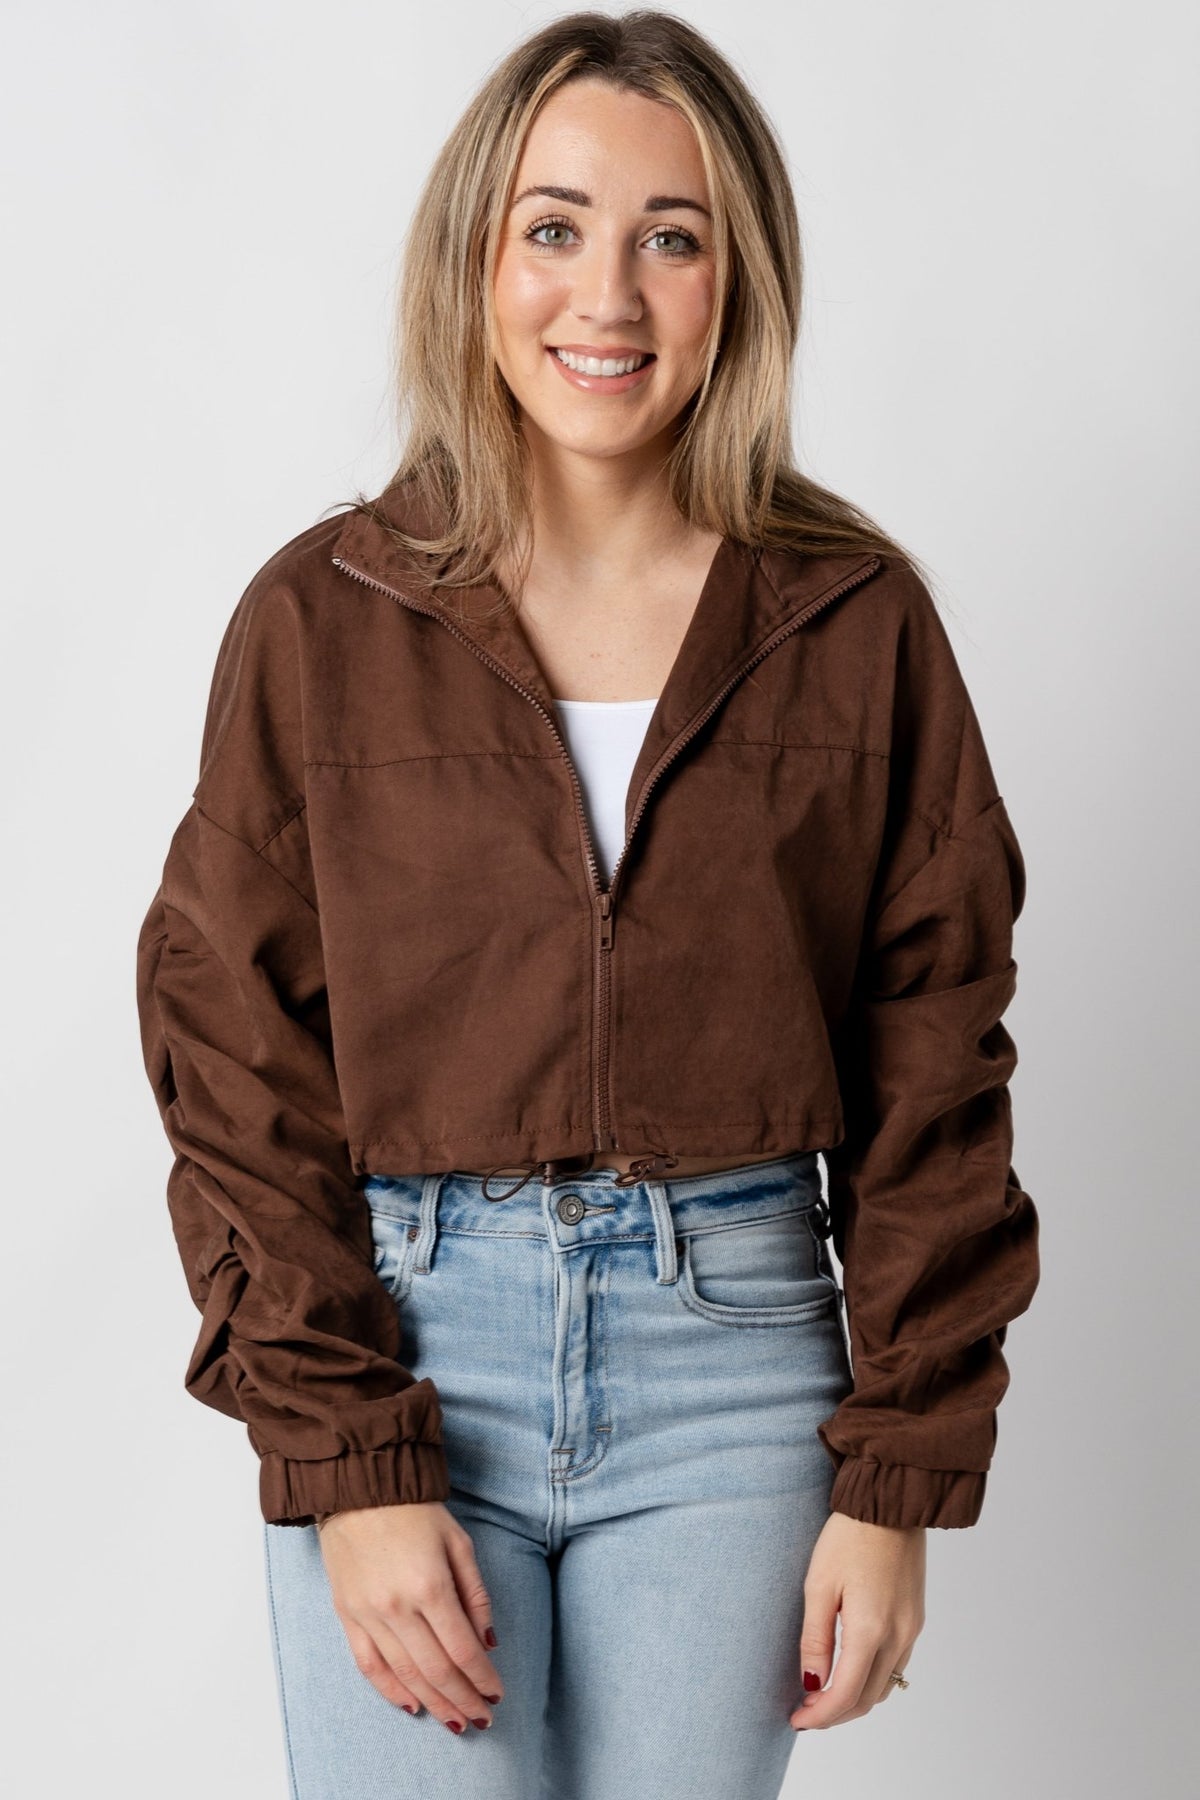 Drawstring crop jacket brown – Trendy Jackets | Cute Fashion Blazers at Lush Fashion Lounge Boutique in Oklahoma City